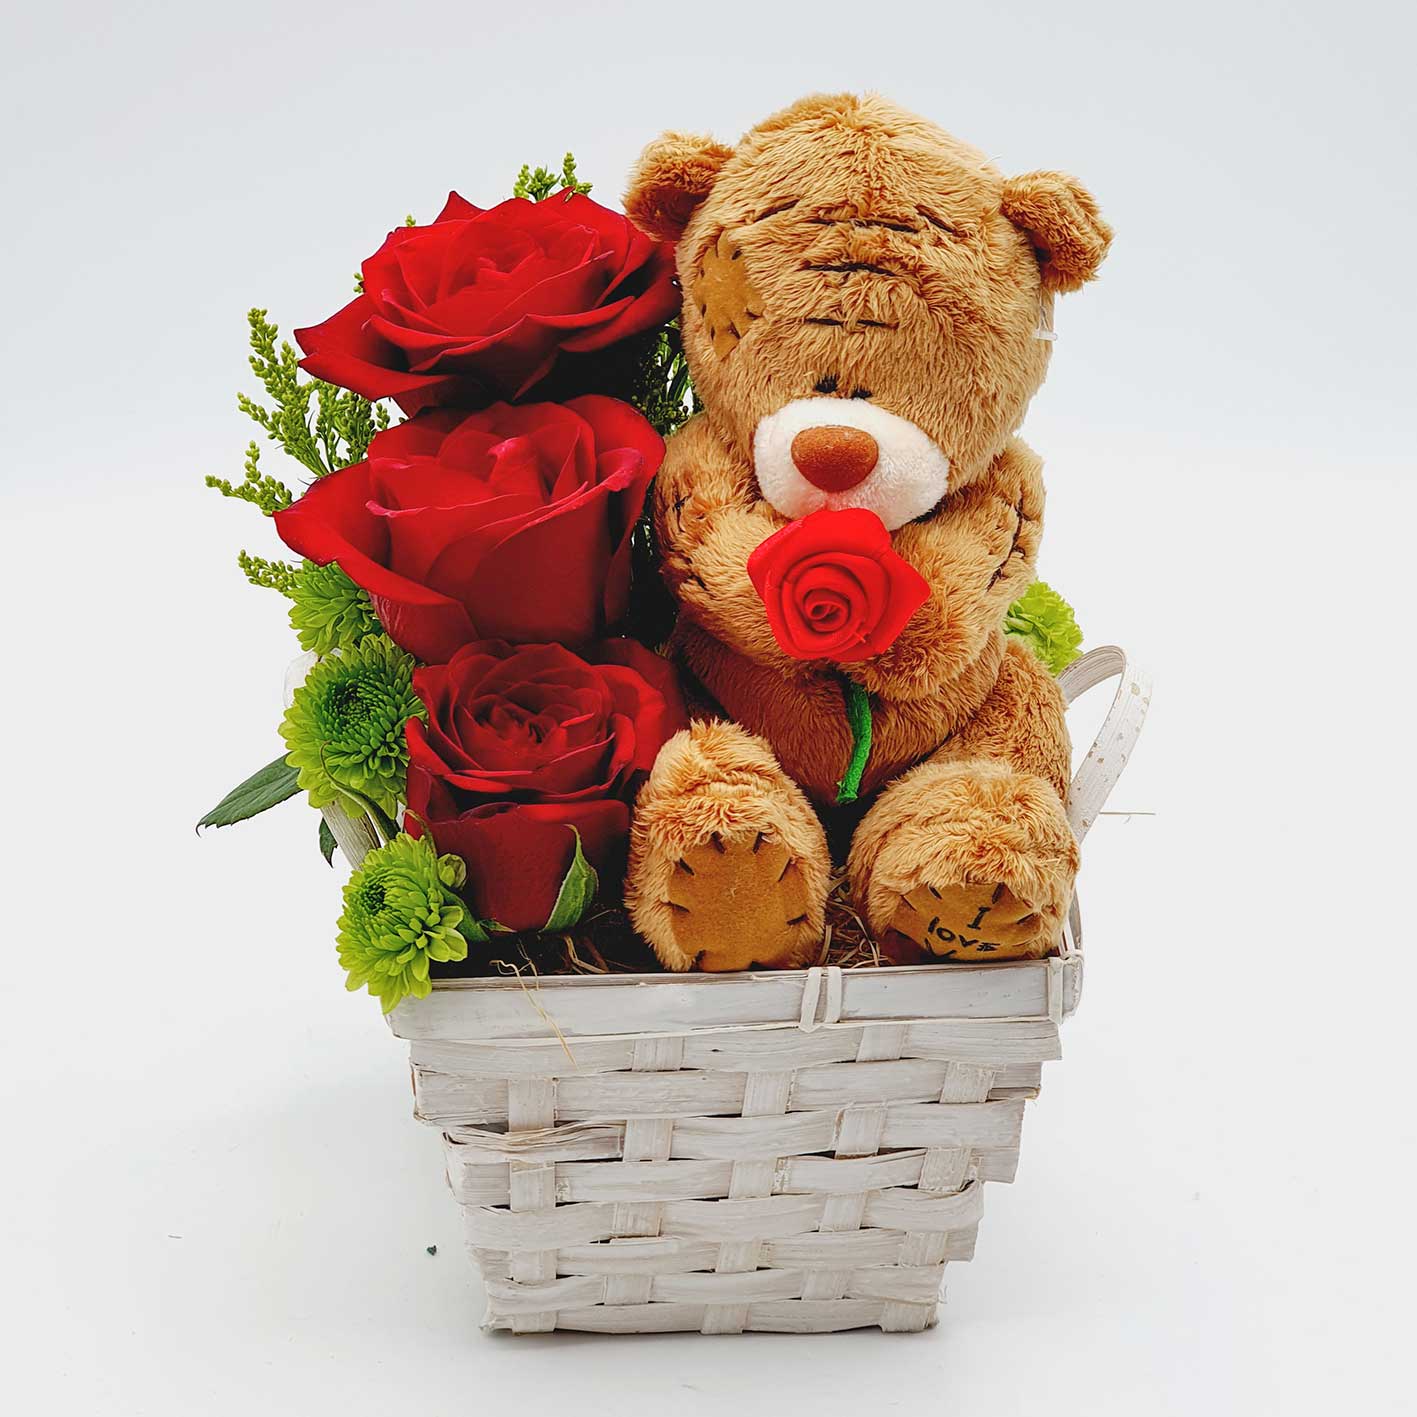 Roses & Teddy